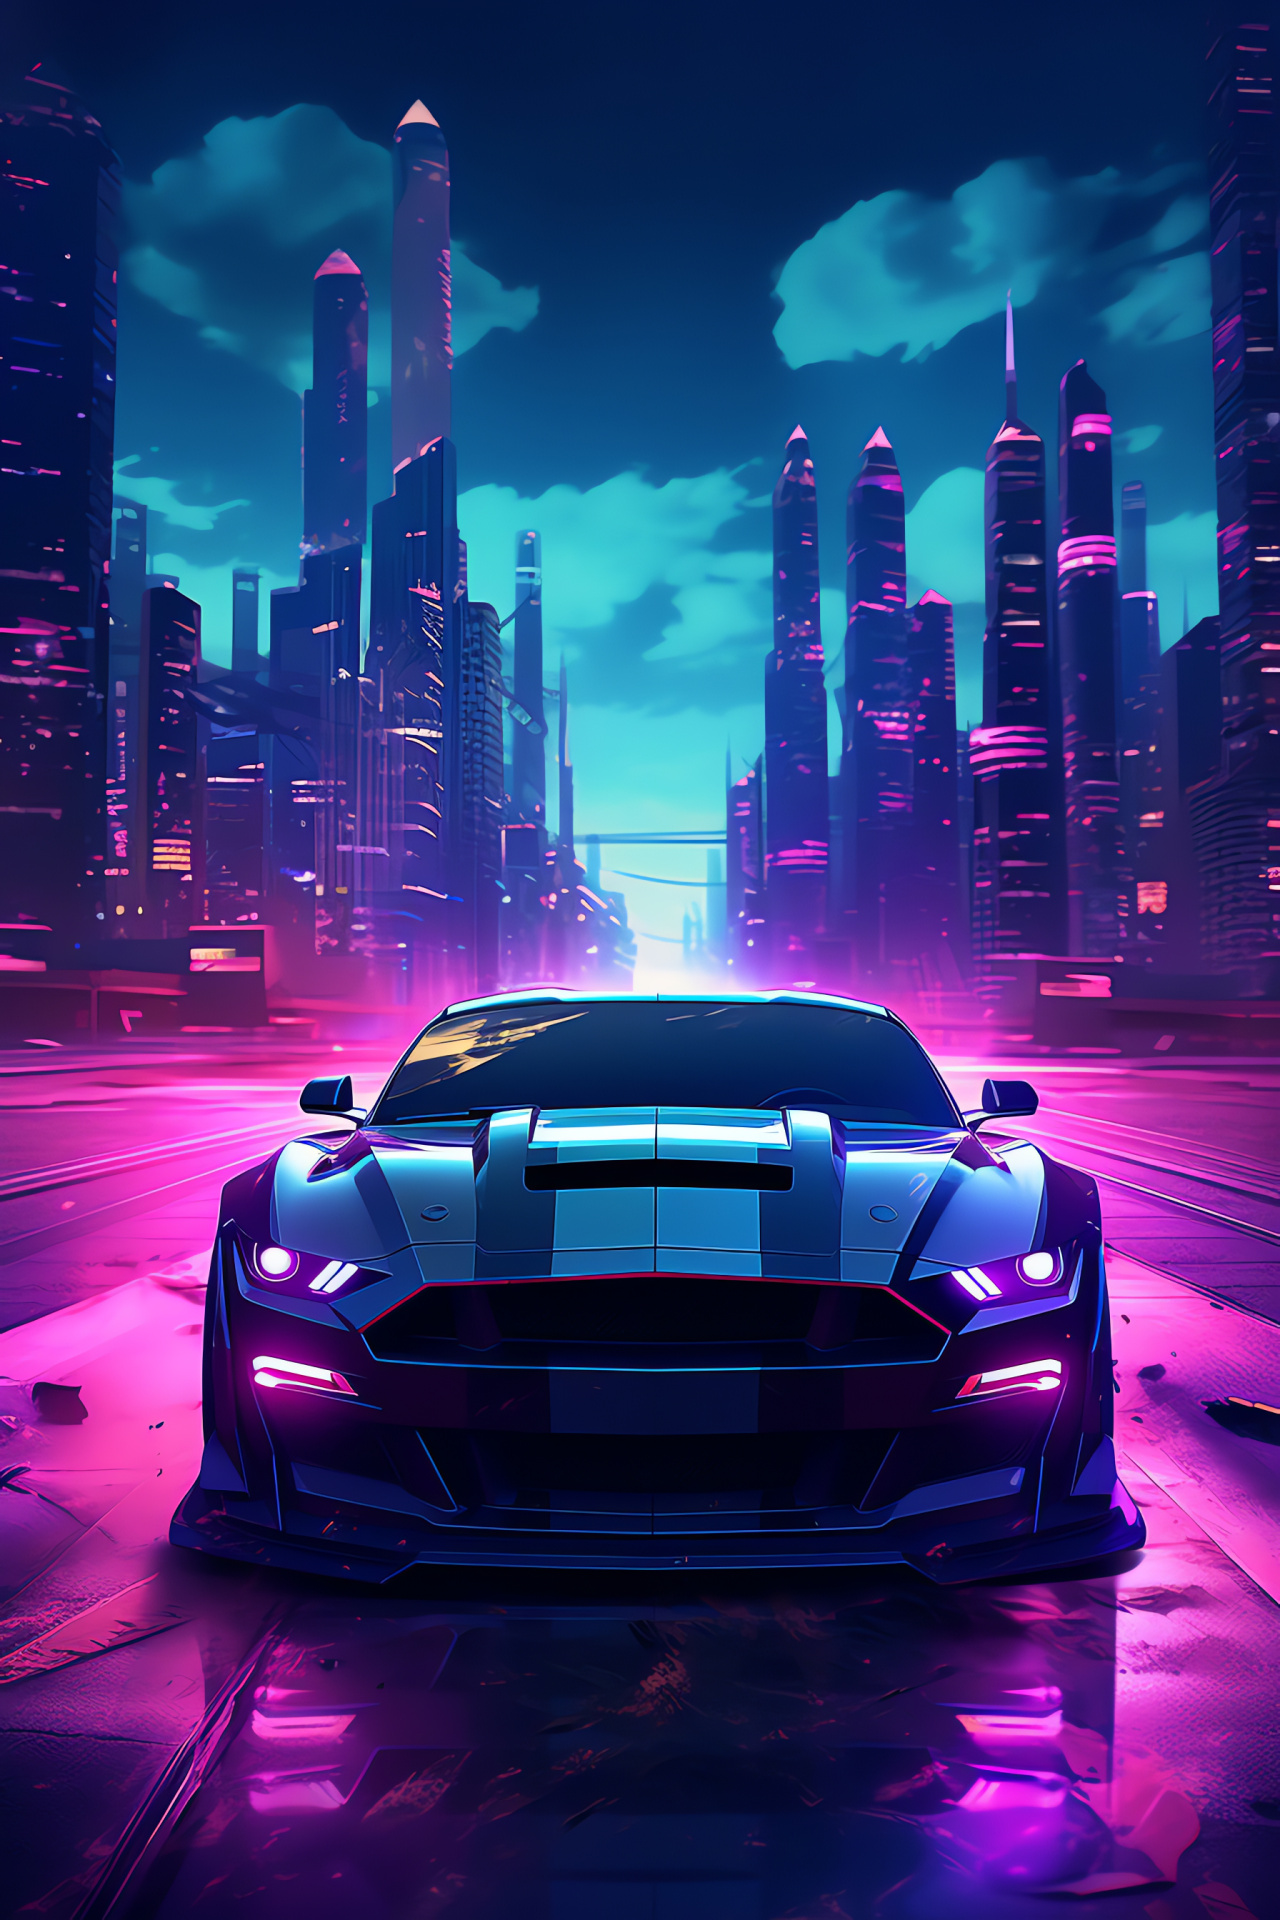 Ford Mustang cyber view, Futuristic Mustang art, Neon-lit auto, Cyberpunk driving, Urban Mustang scene, HD Phone Image